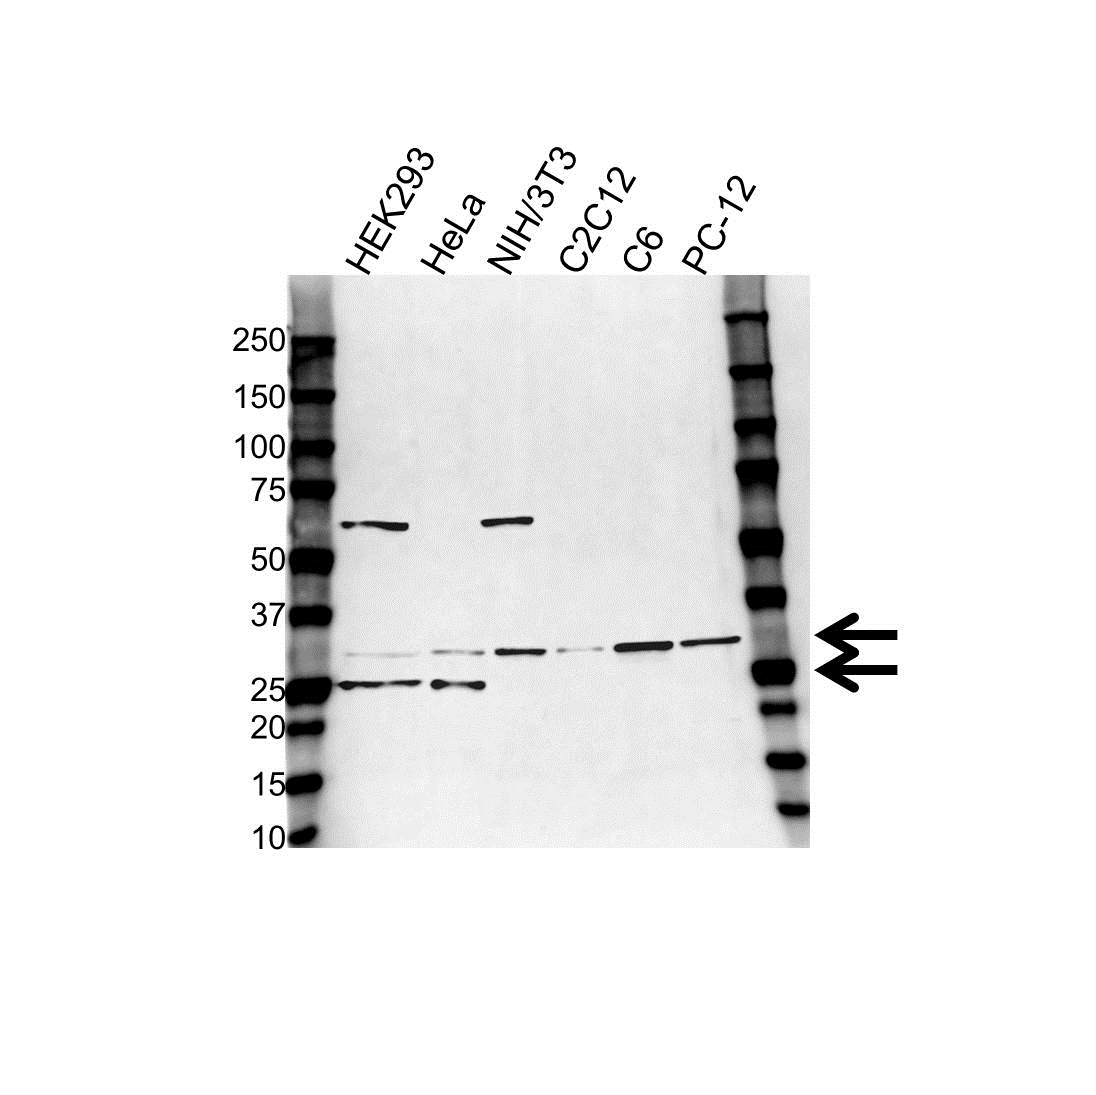 Anti High Mobility Group Protein B1 Antibody (PrecisionAb Polyclonal Antibody) gallery image 1